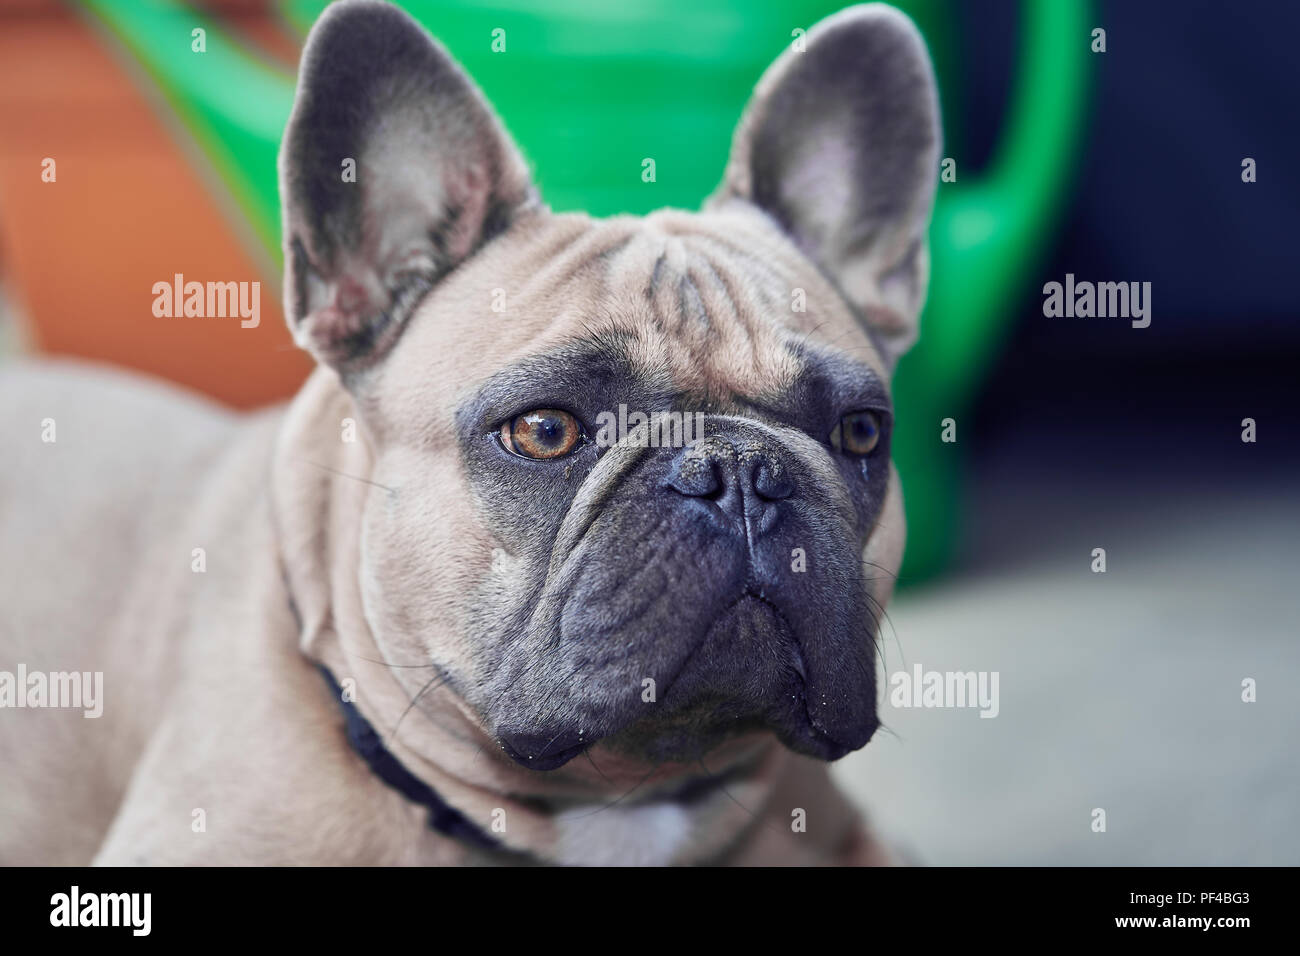 Adorable French Bulldog face Stock Photo - Alamy